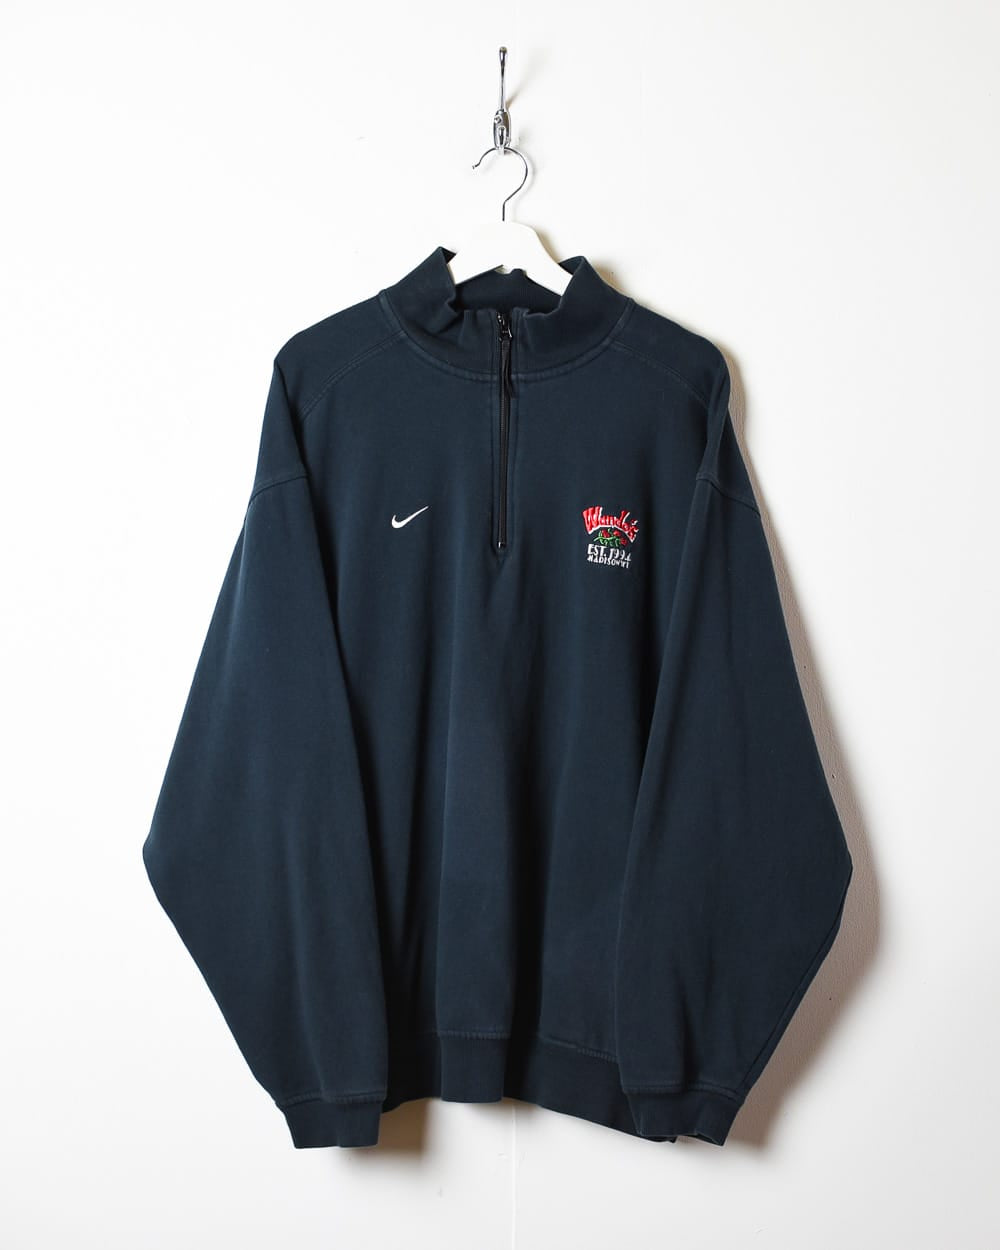 Black Nike Team Wando's 1/4 Zip Sweatshirt - XX-Large